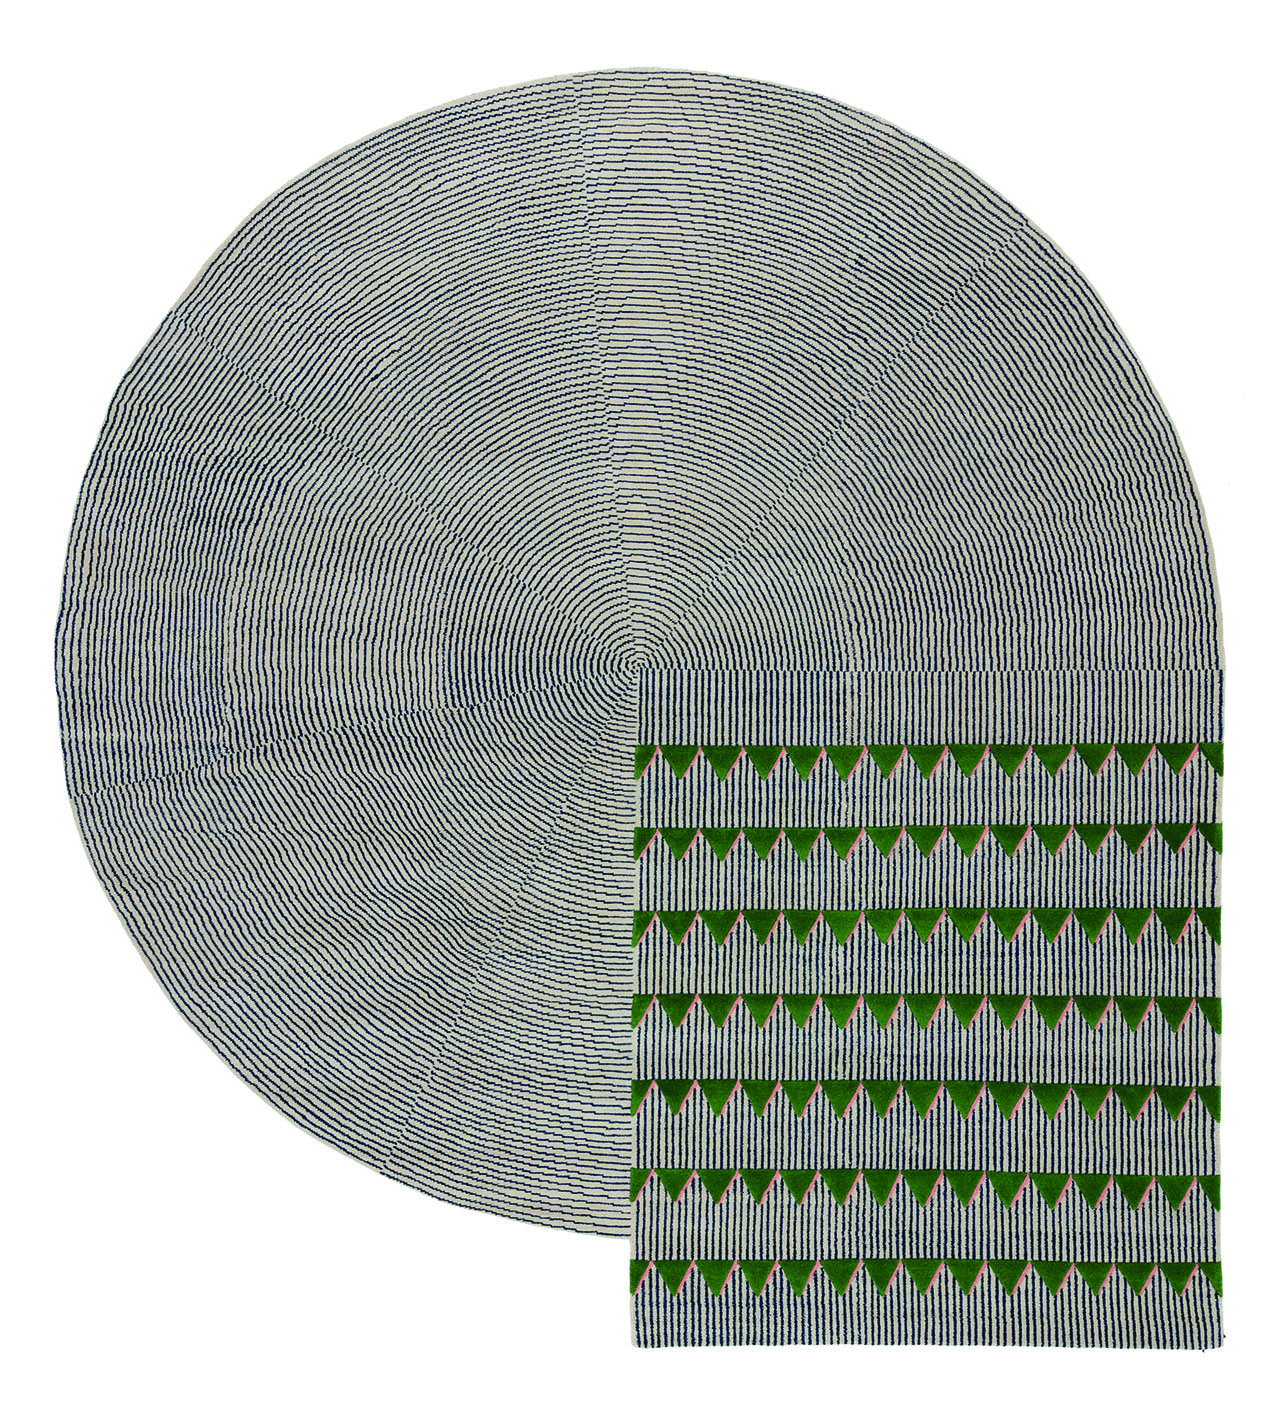 Plasterworks rug series designed by david/nicolas for cc-tapis.